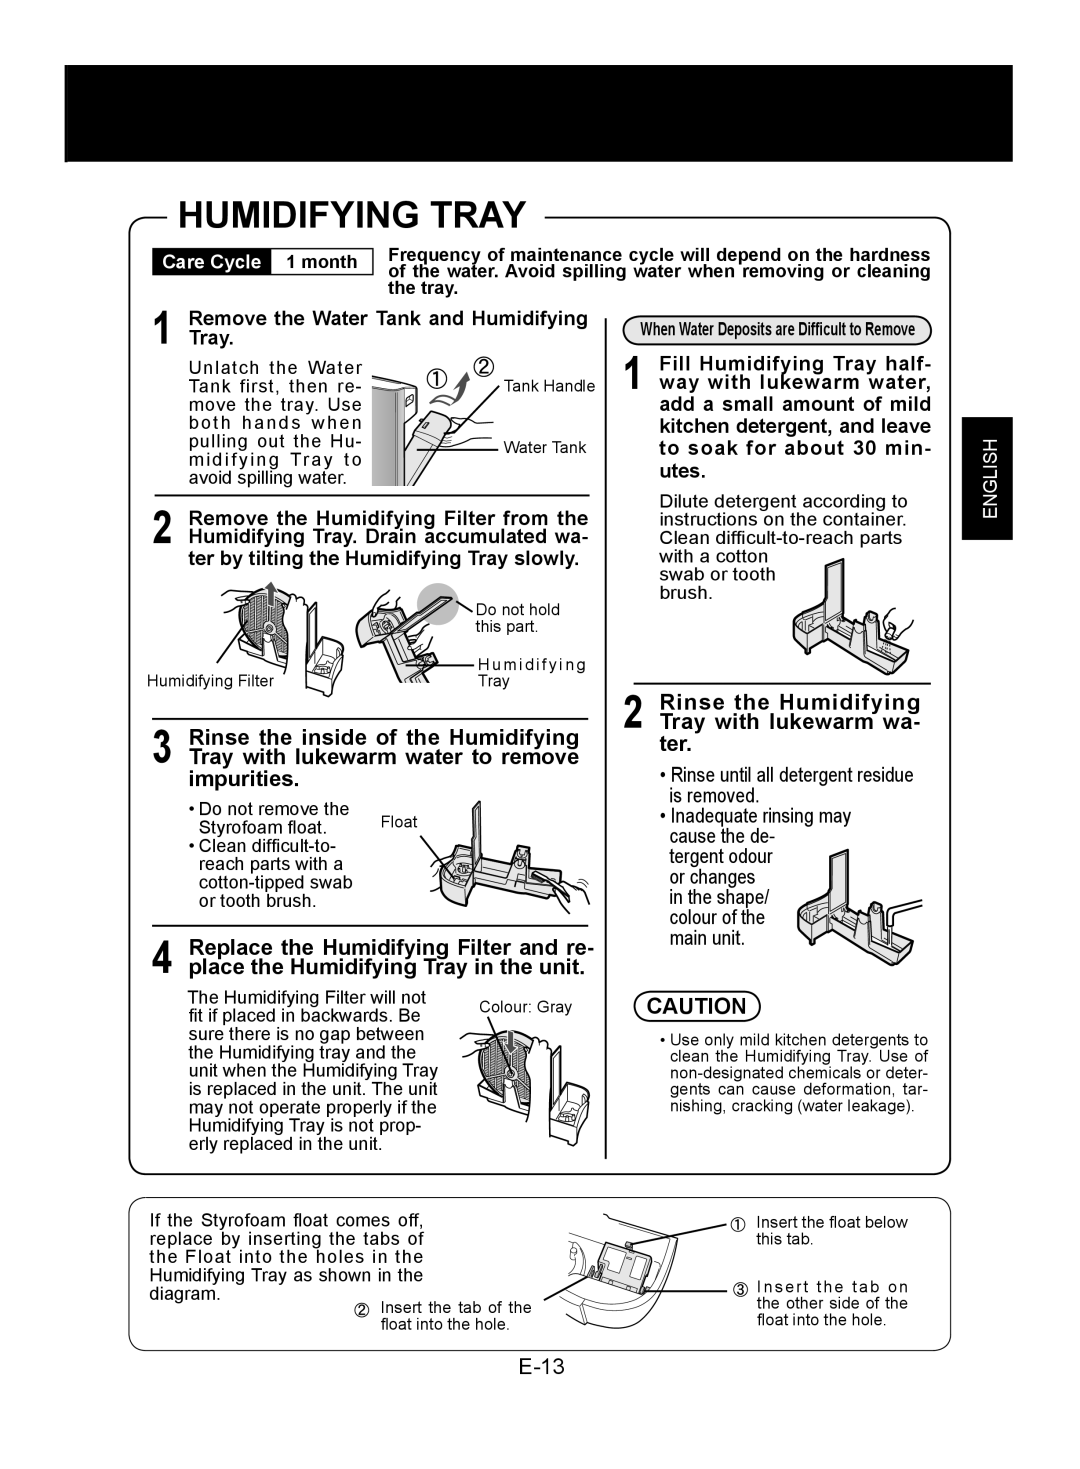 Sharp KC-850EK Humidifying Tray, Rinse the Humidifying, Rinse the inside of the Humidifying, Tray with lukewarm wa, E-13 